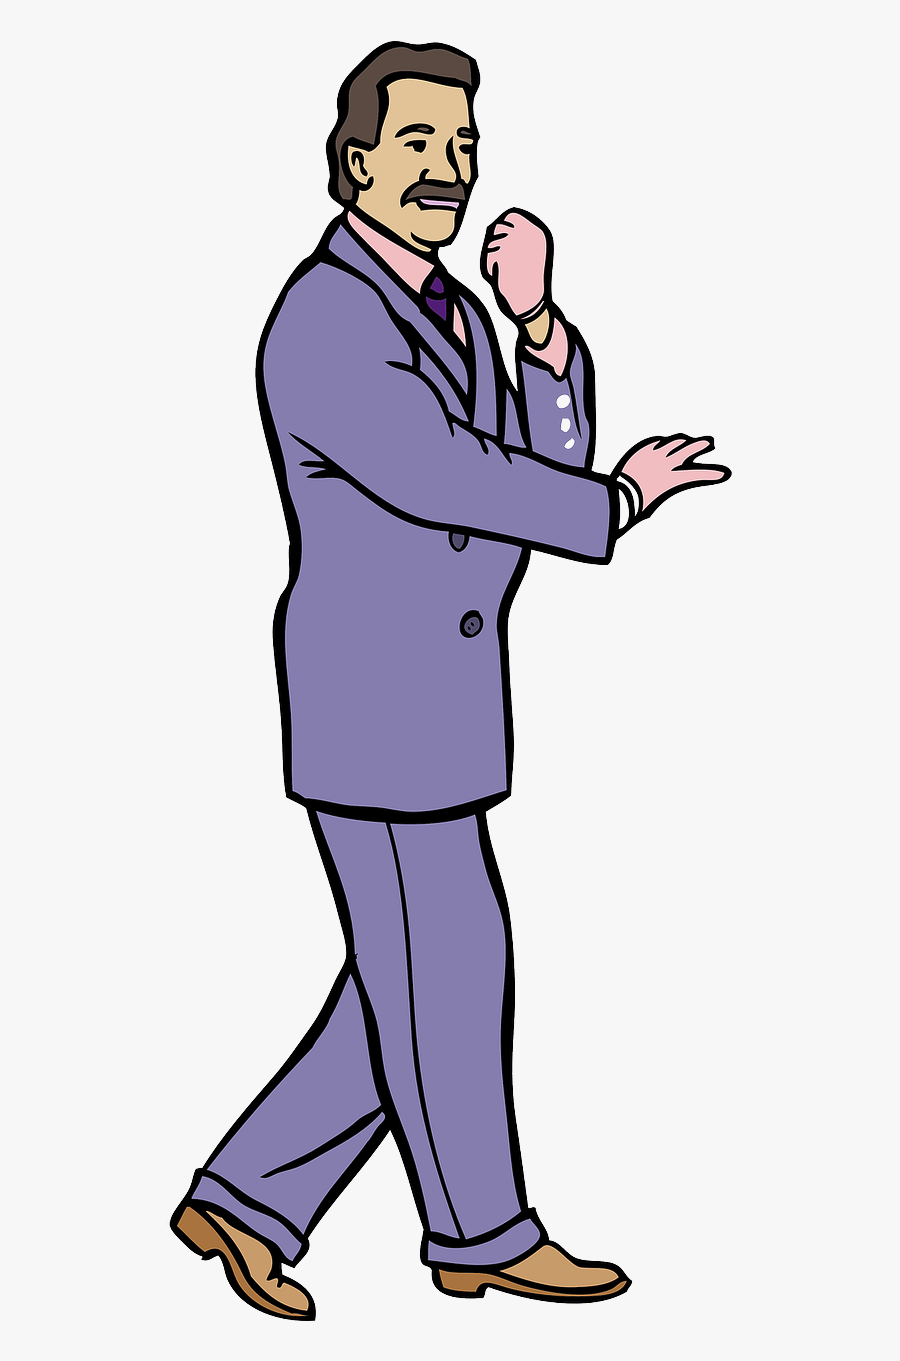 Karate Guy In A Fashionable Purple Suit W/ Gloves Svg - Clip Art, Transparent Clipart